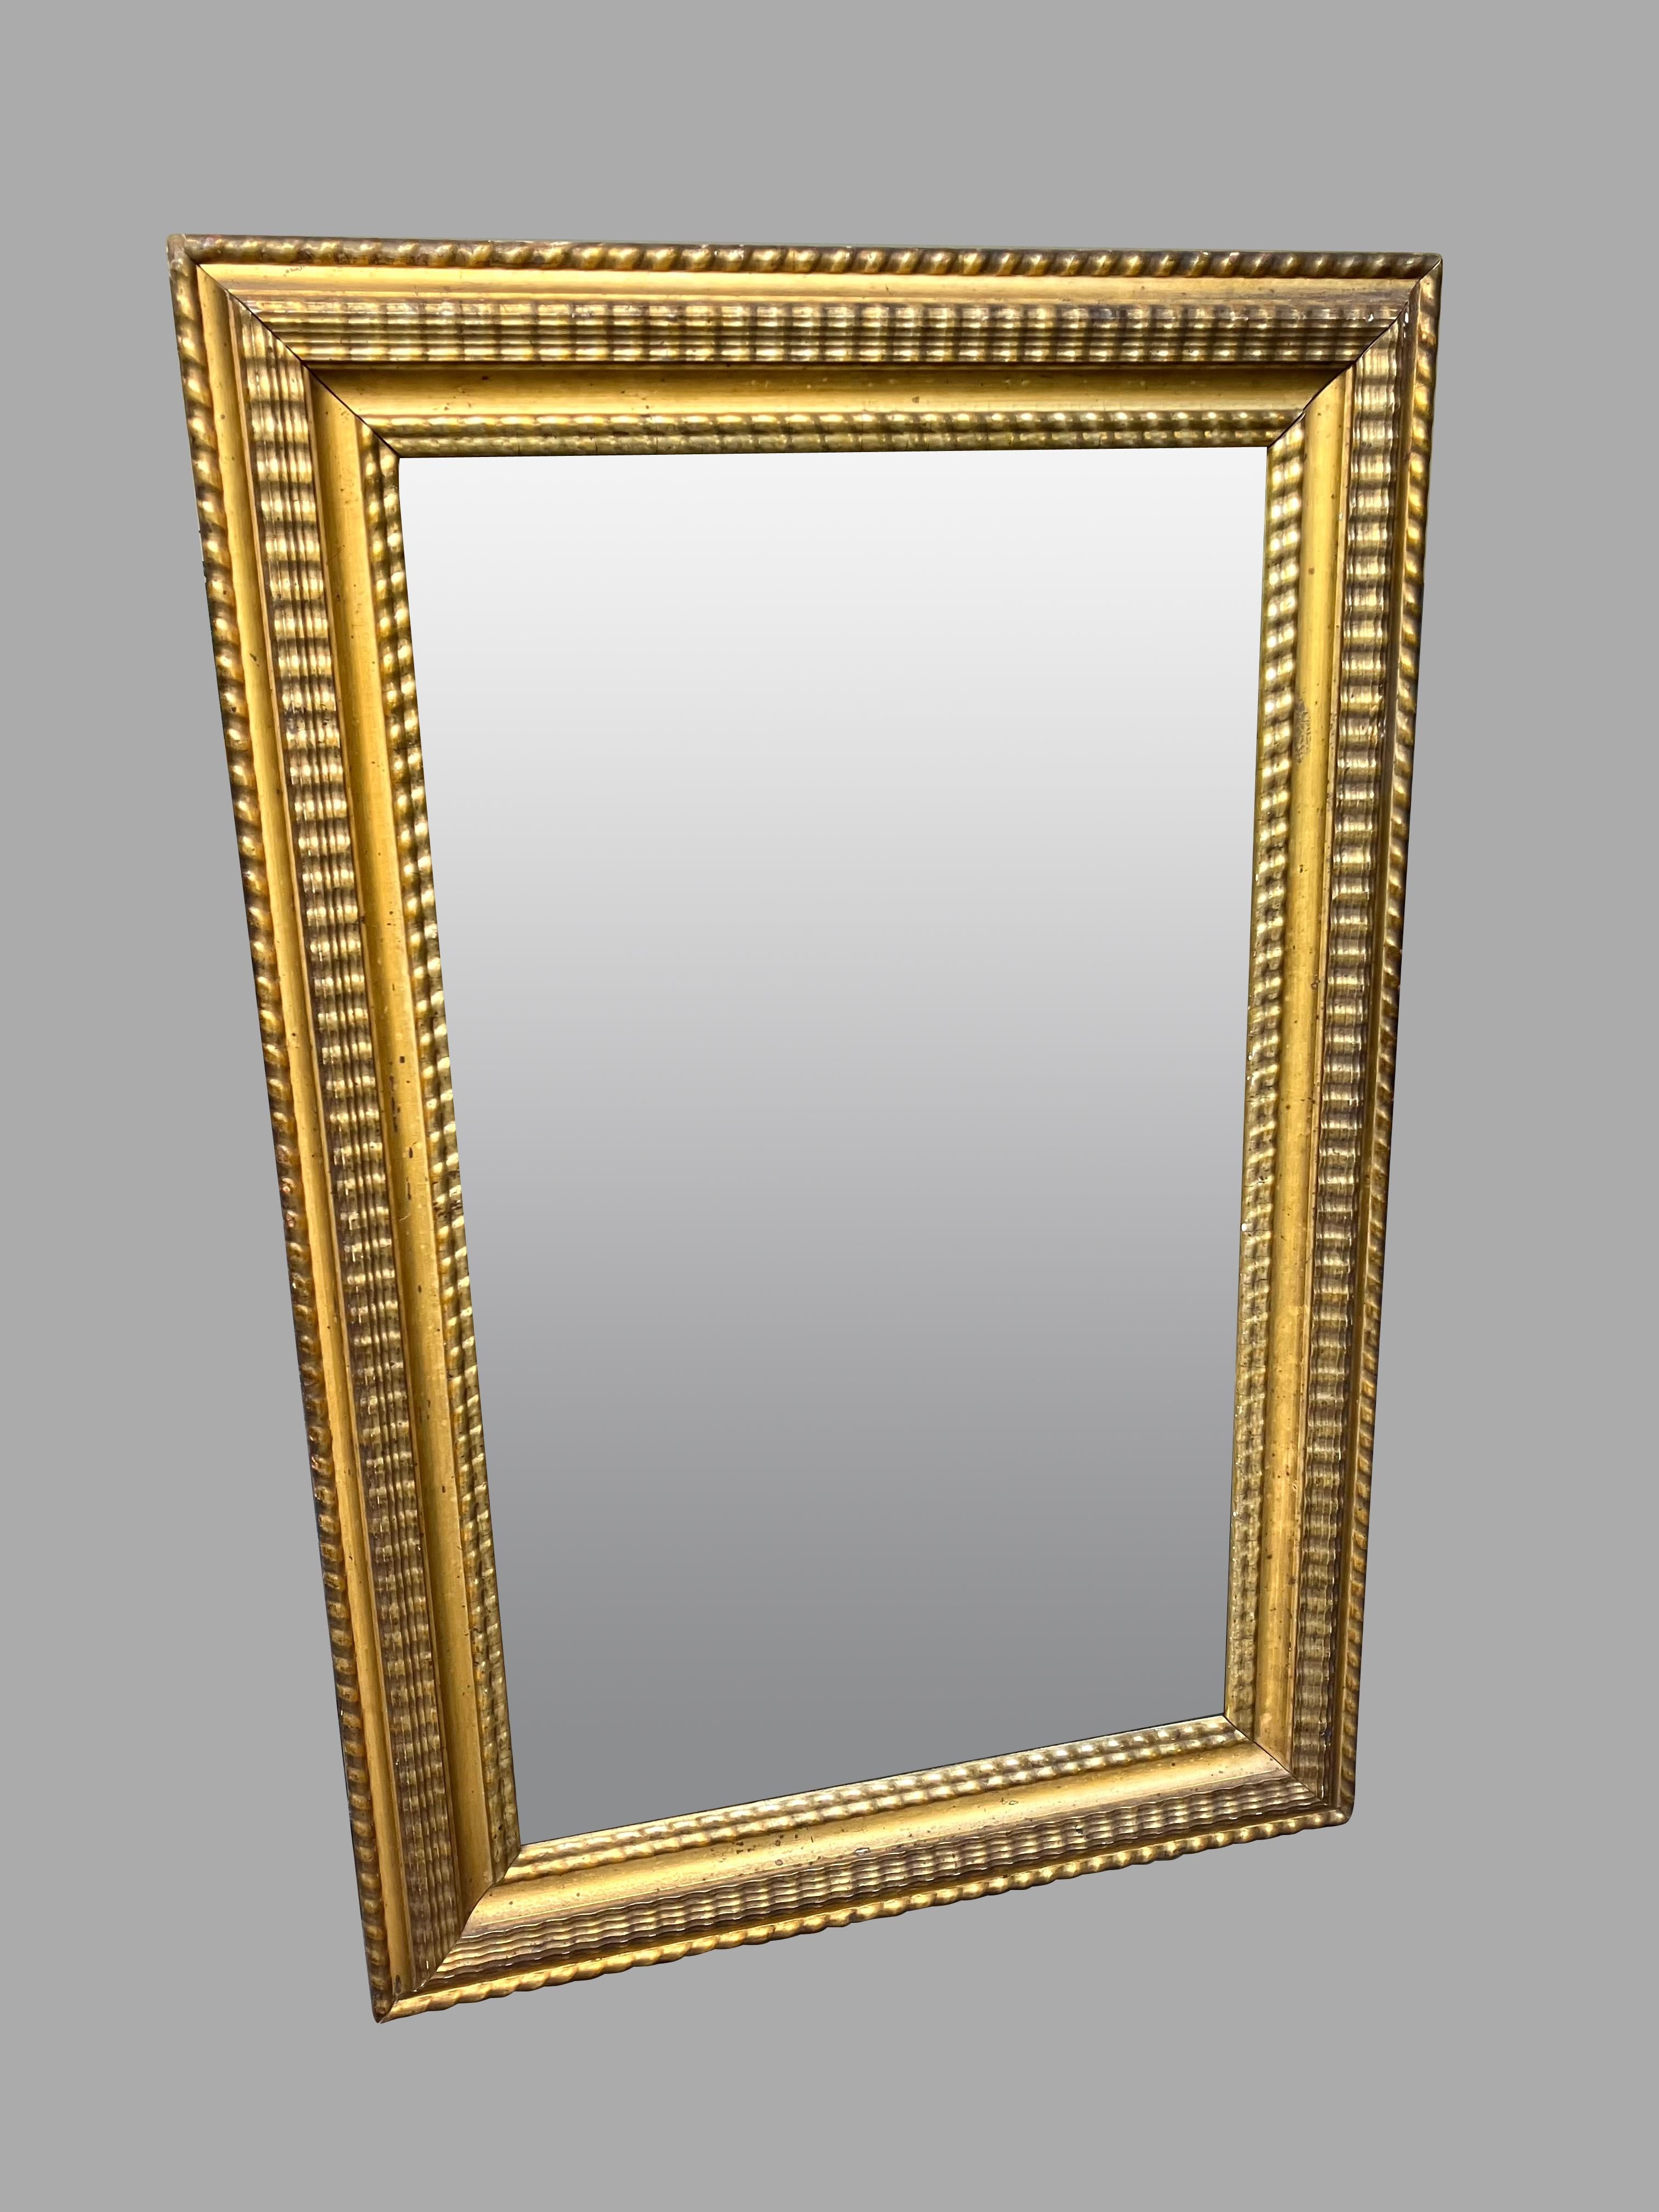 19th Century American Nineteenth Century Giltwood Mirror Retaining Its Original Glass Plate For Sale